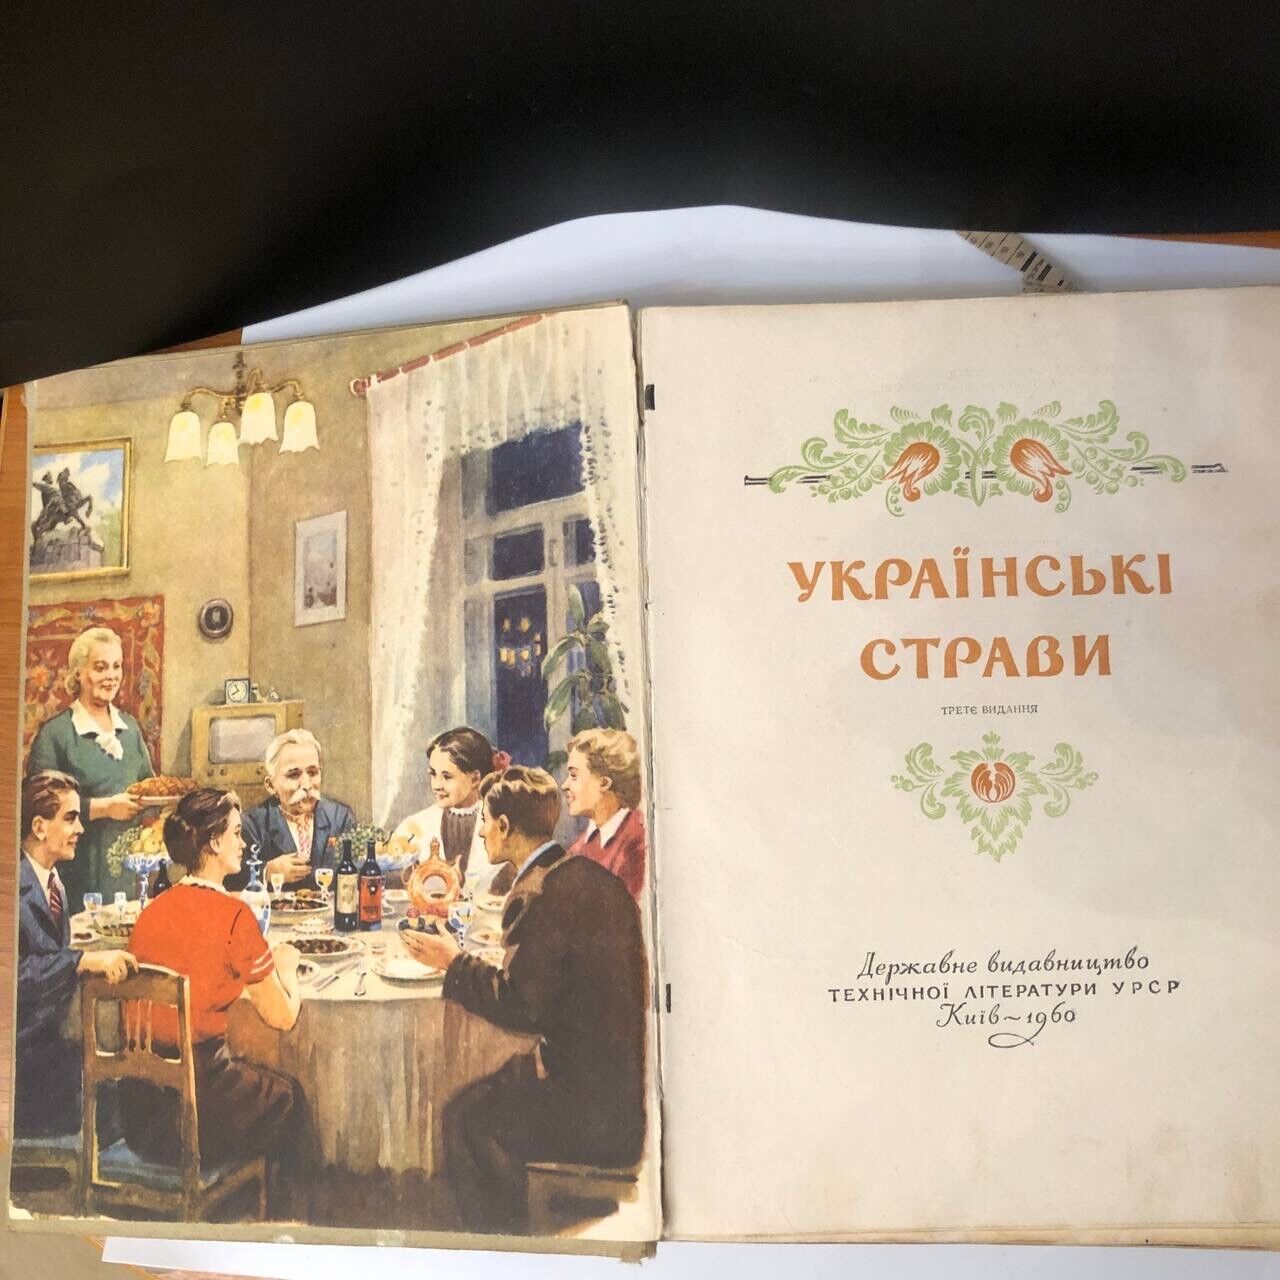 Vintage Ukrainian cuisine book Recipes USSR 1960s